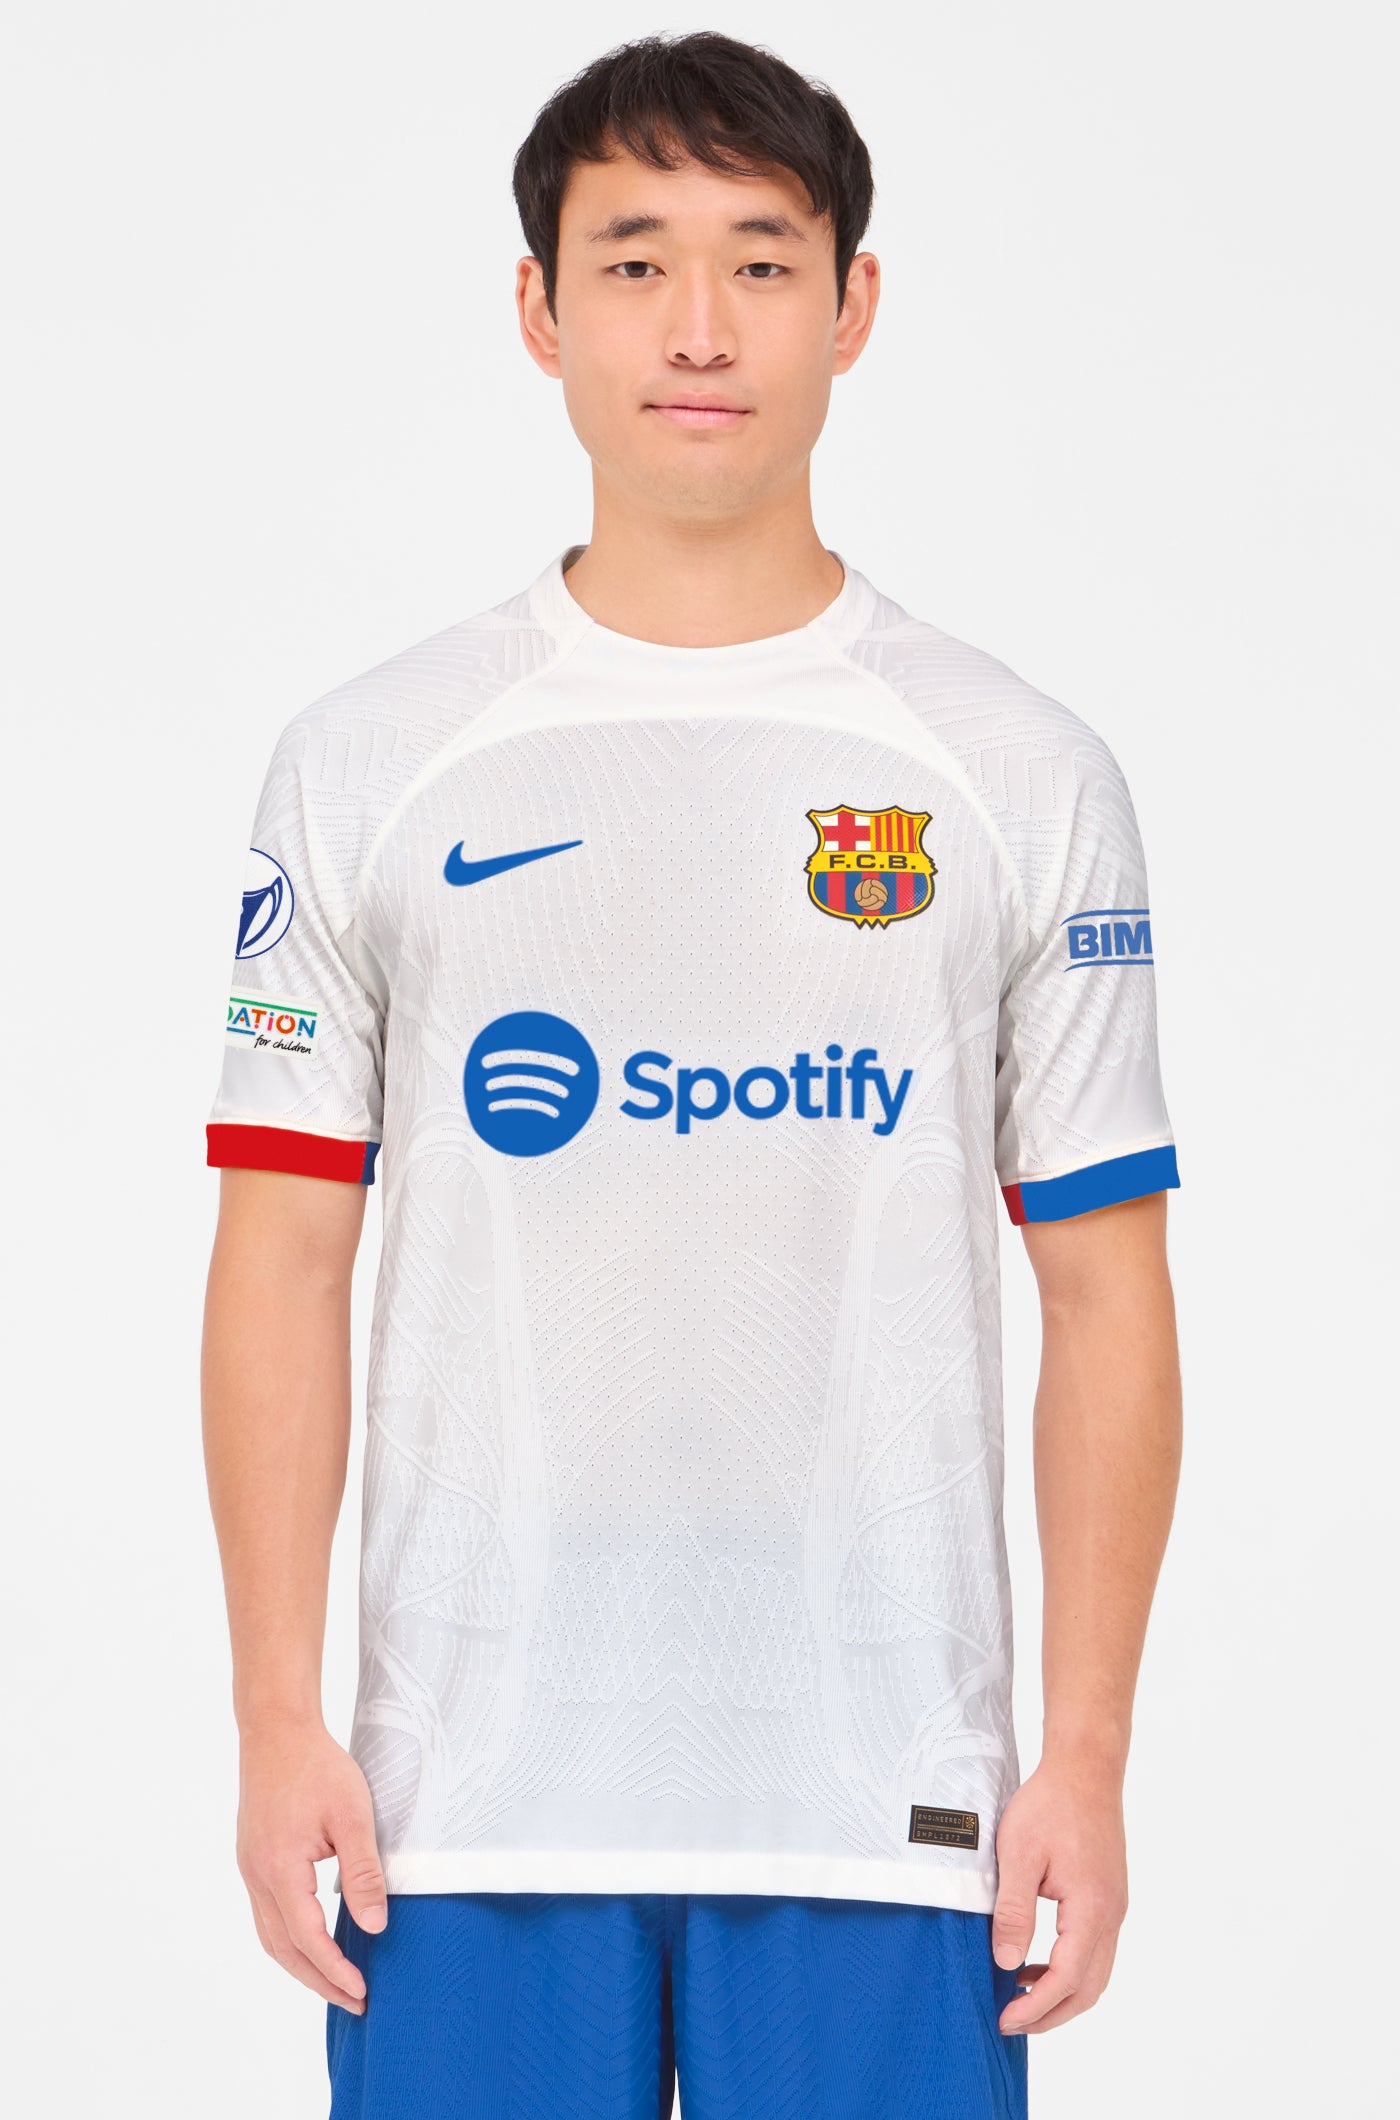 UWCL FC Barcelona away shirt 23/24 Player's Edition - BRONZE